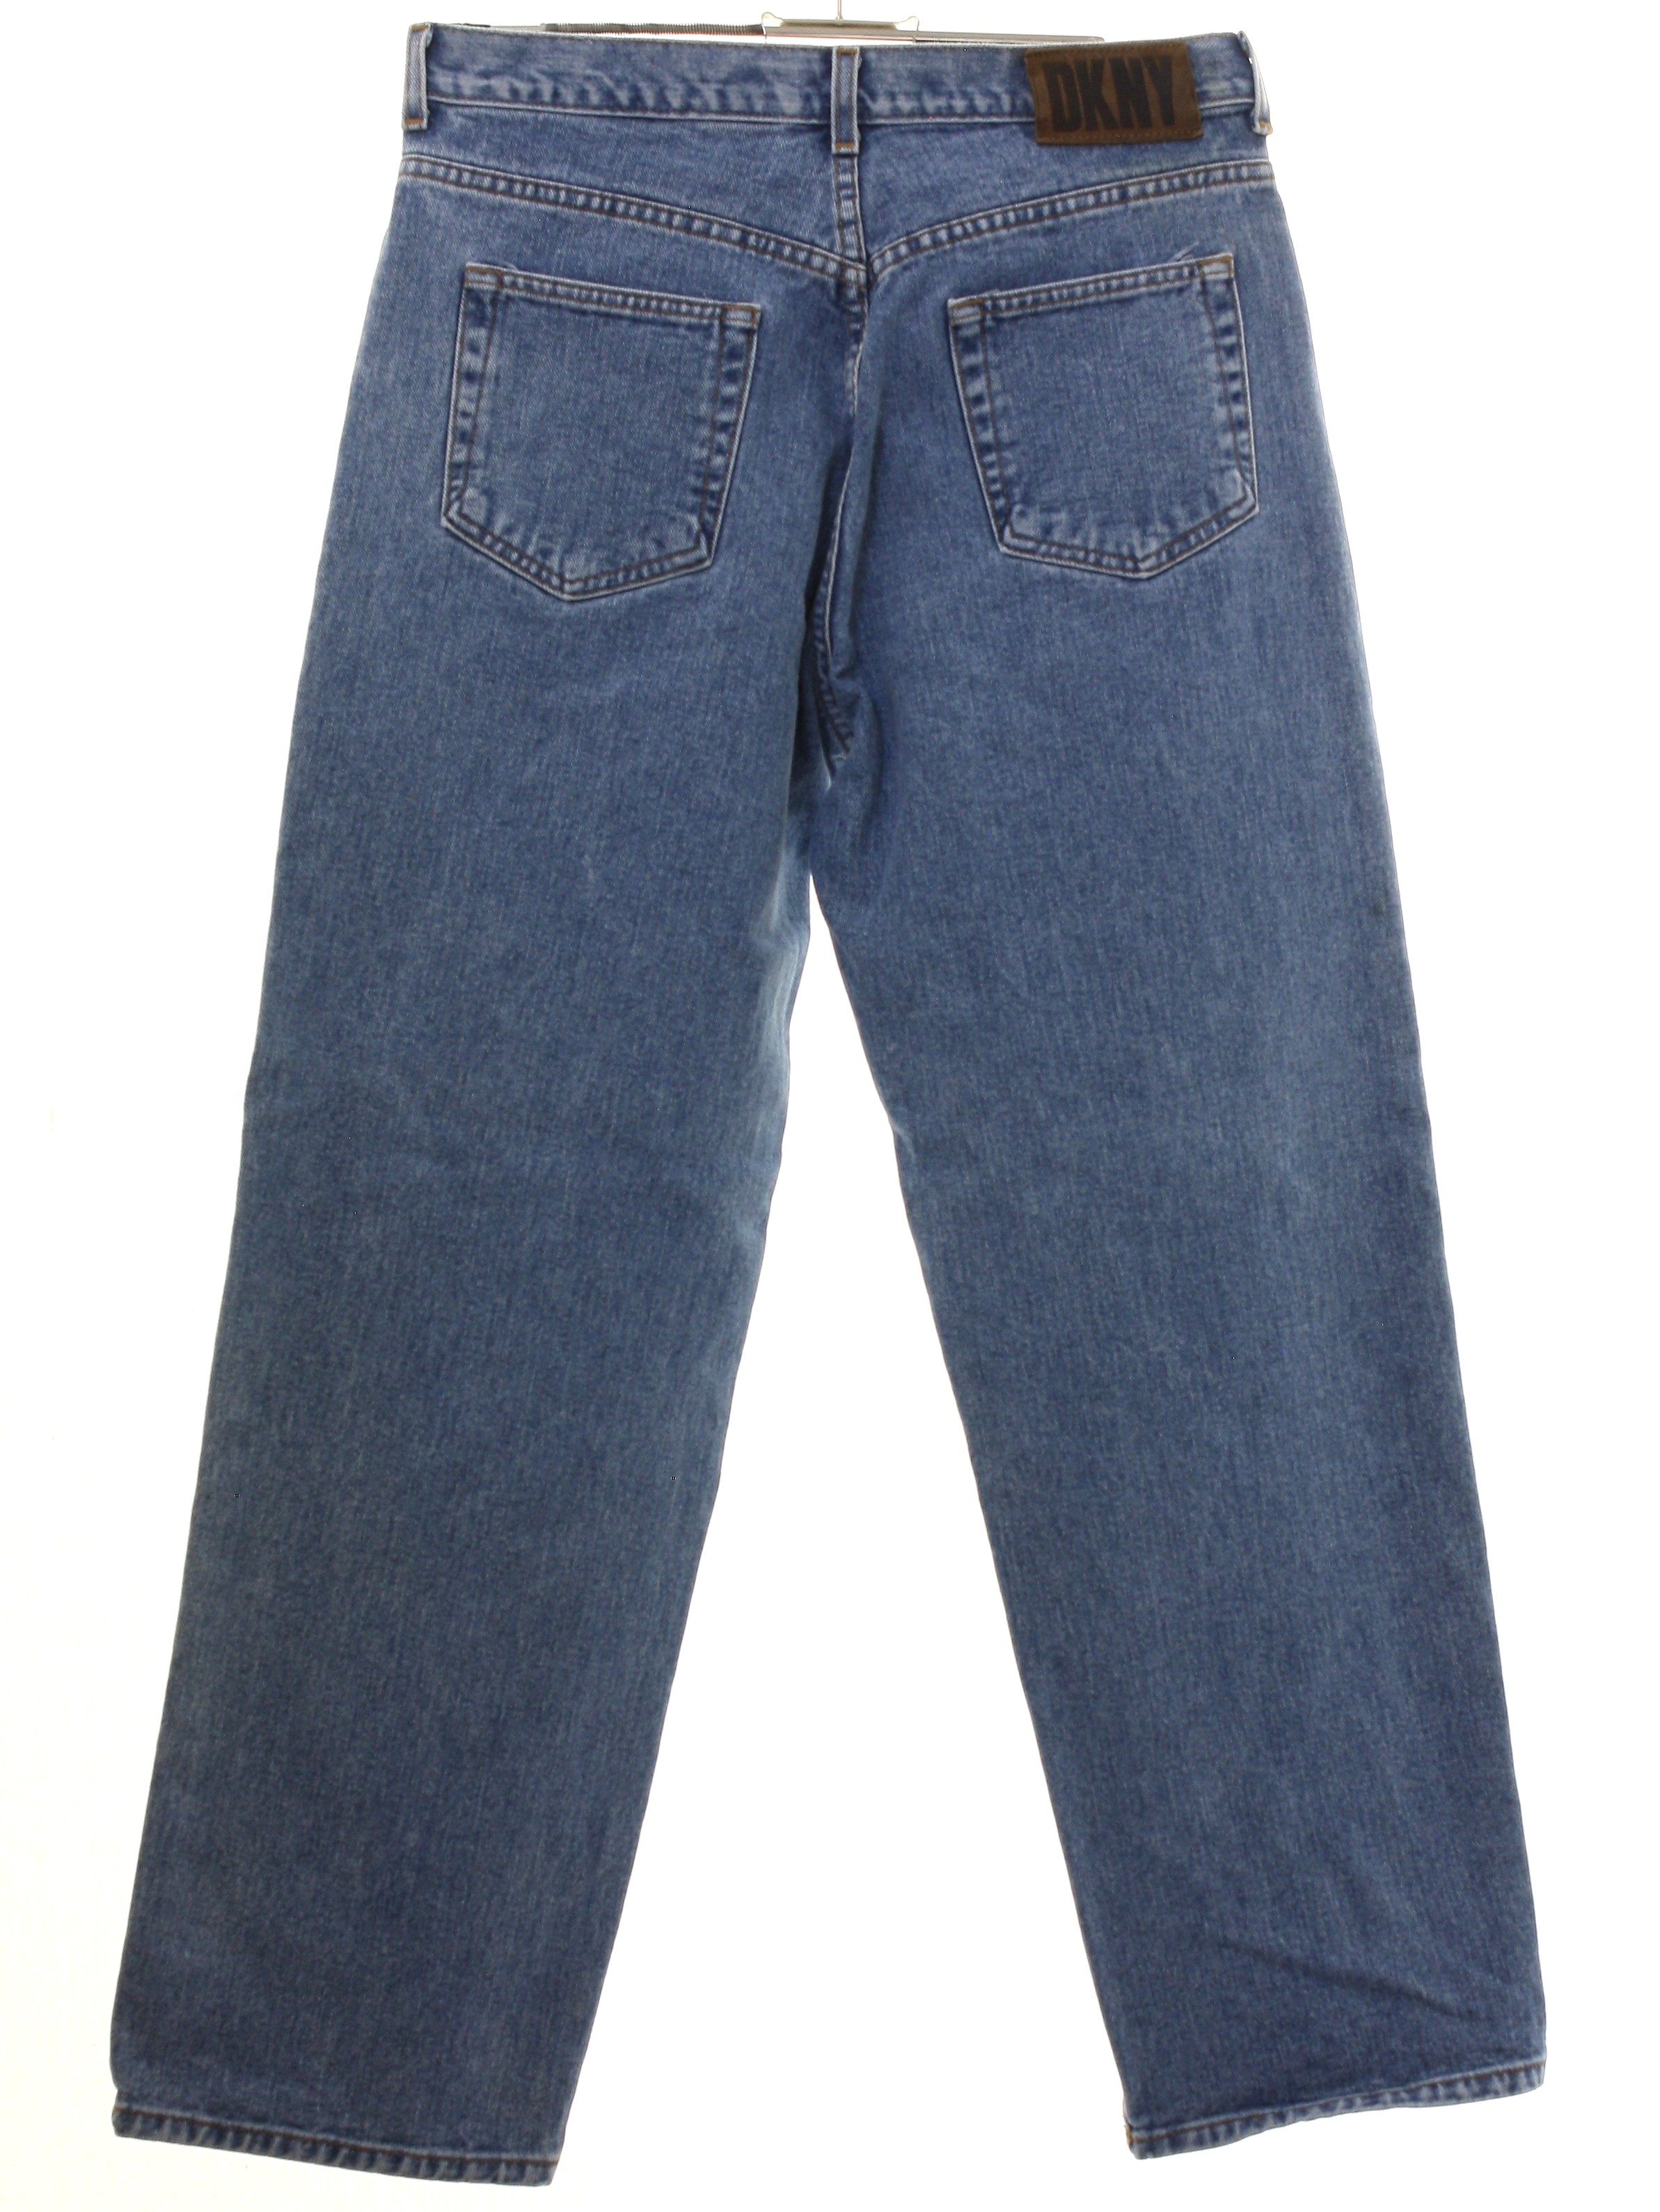 Retro 1990's Pants (DKNY Jeans) : 90s -DKNY Jeans- Womens stone washed ...